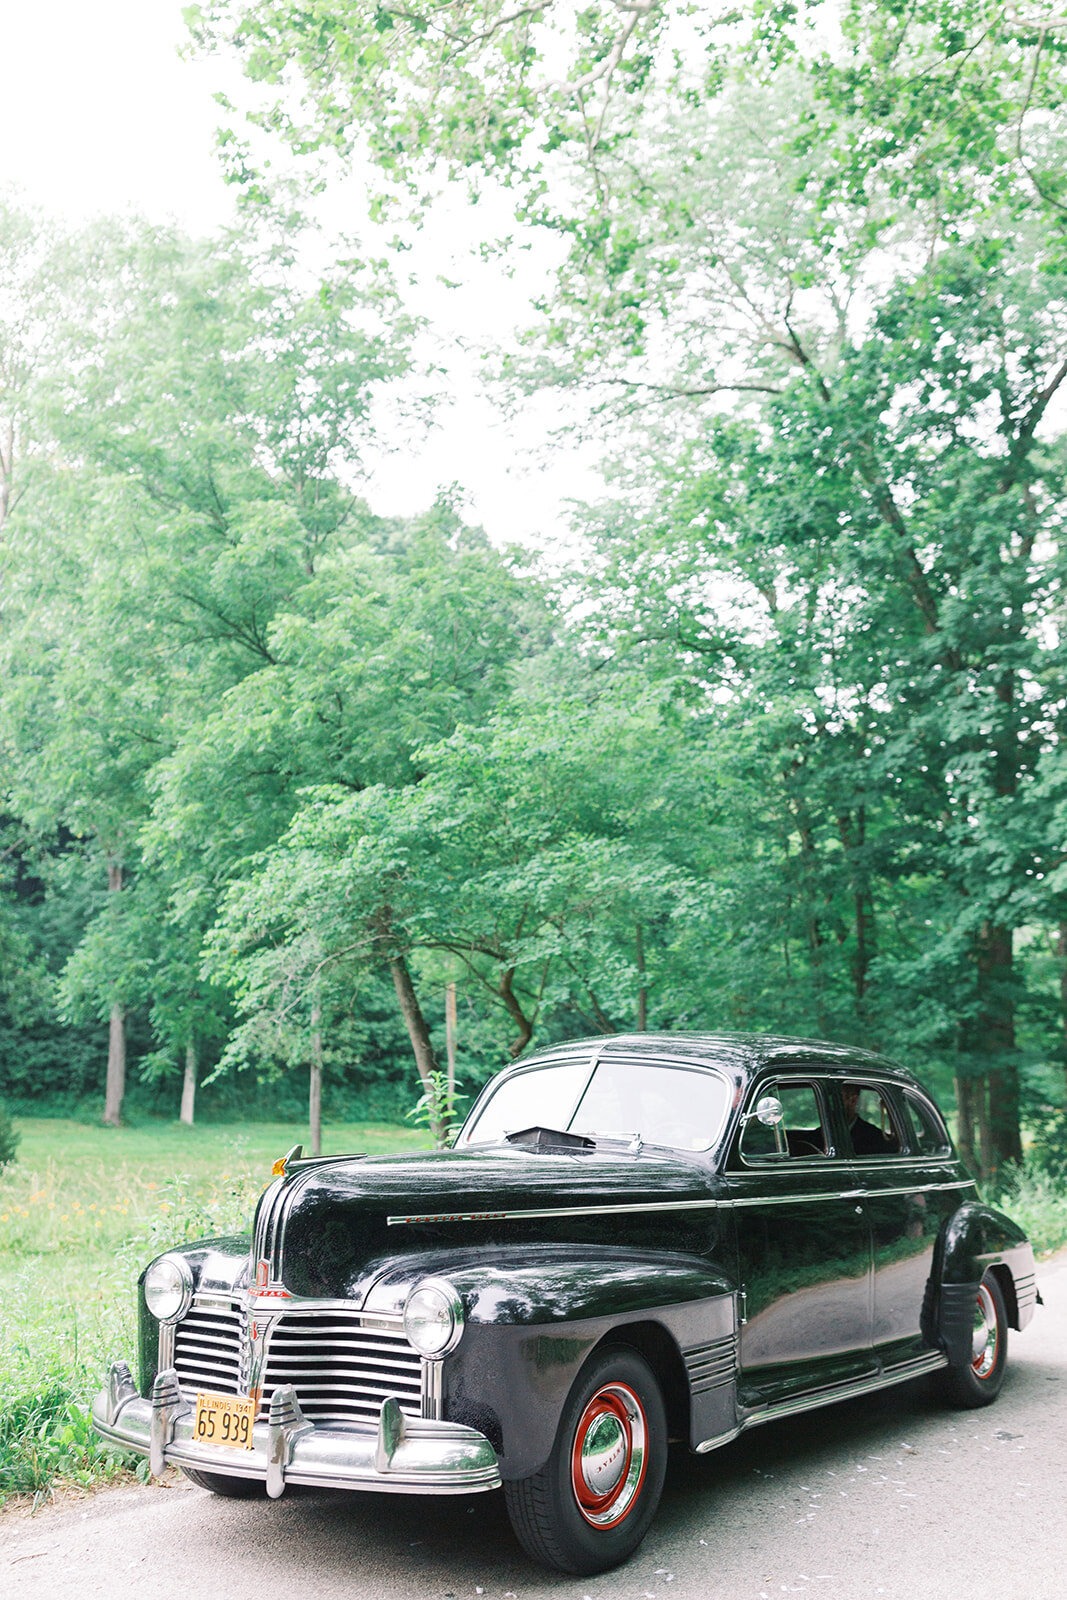 classic car wedding photography